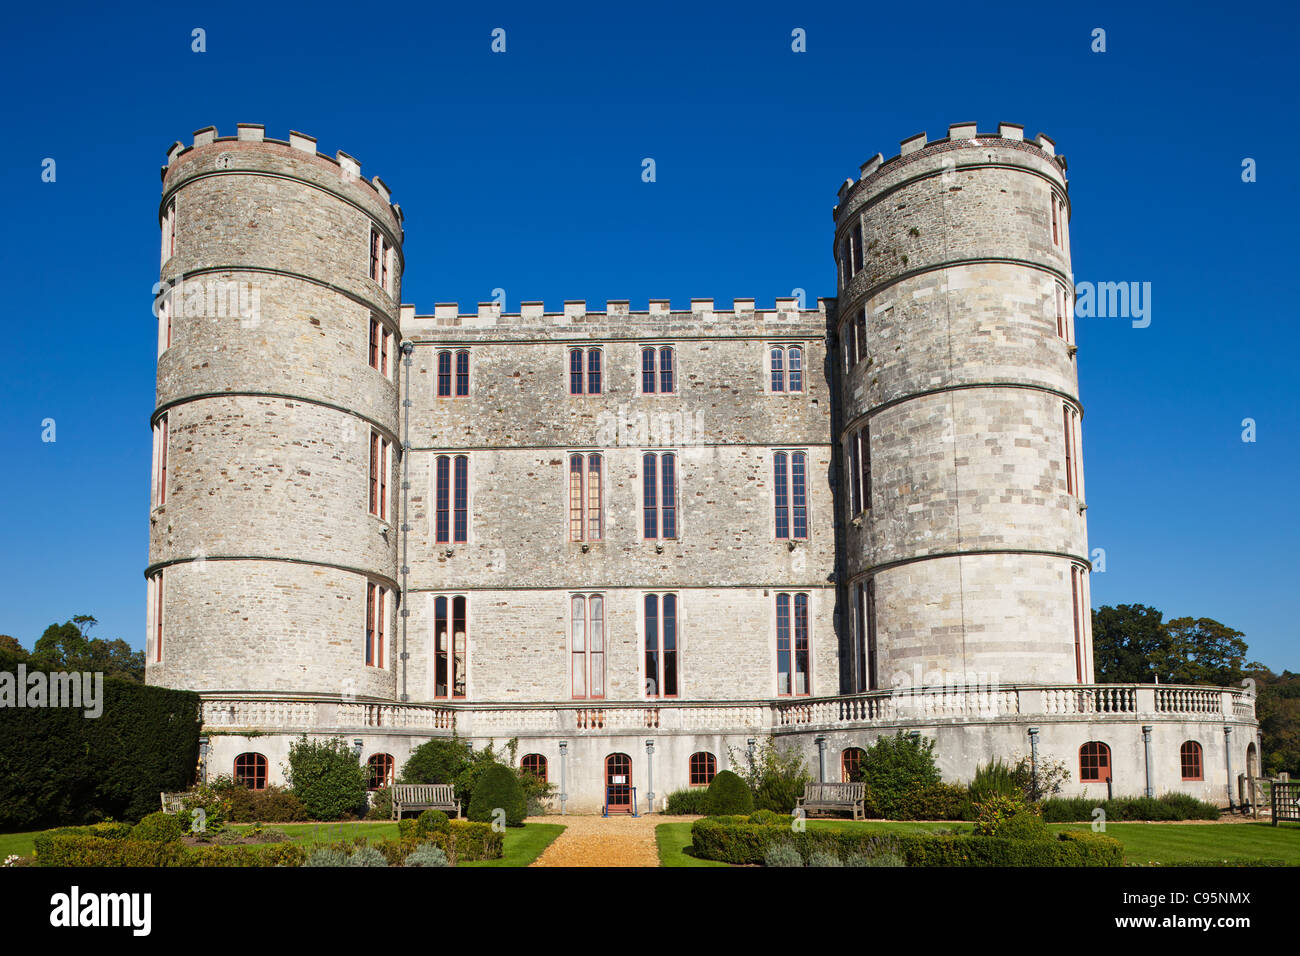 England, Dorset, Lulworth Castle Stock Photo